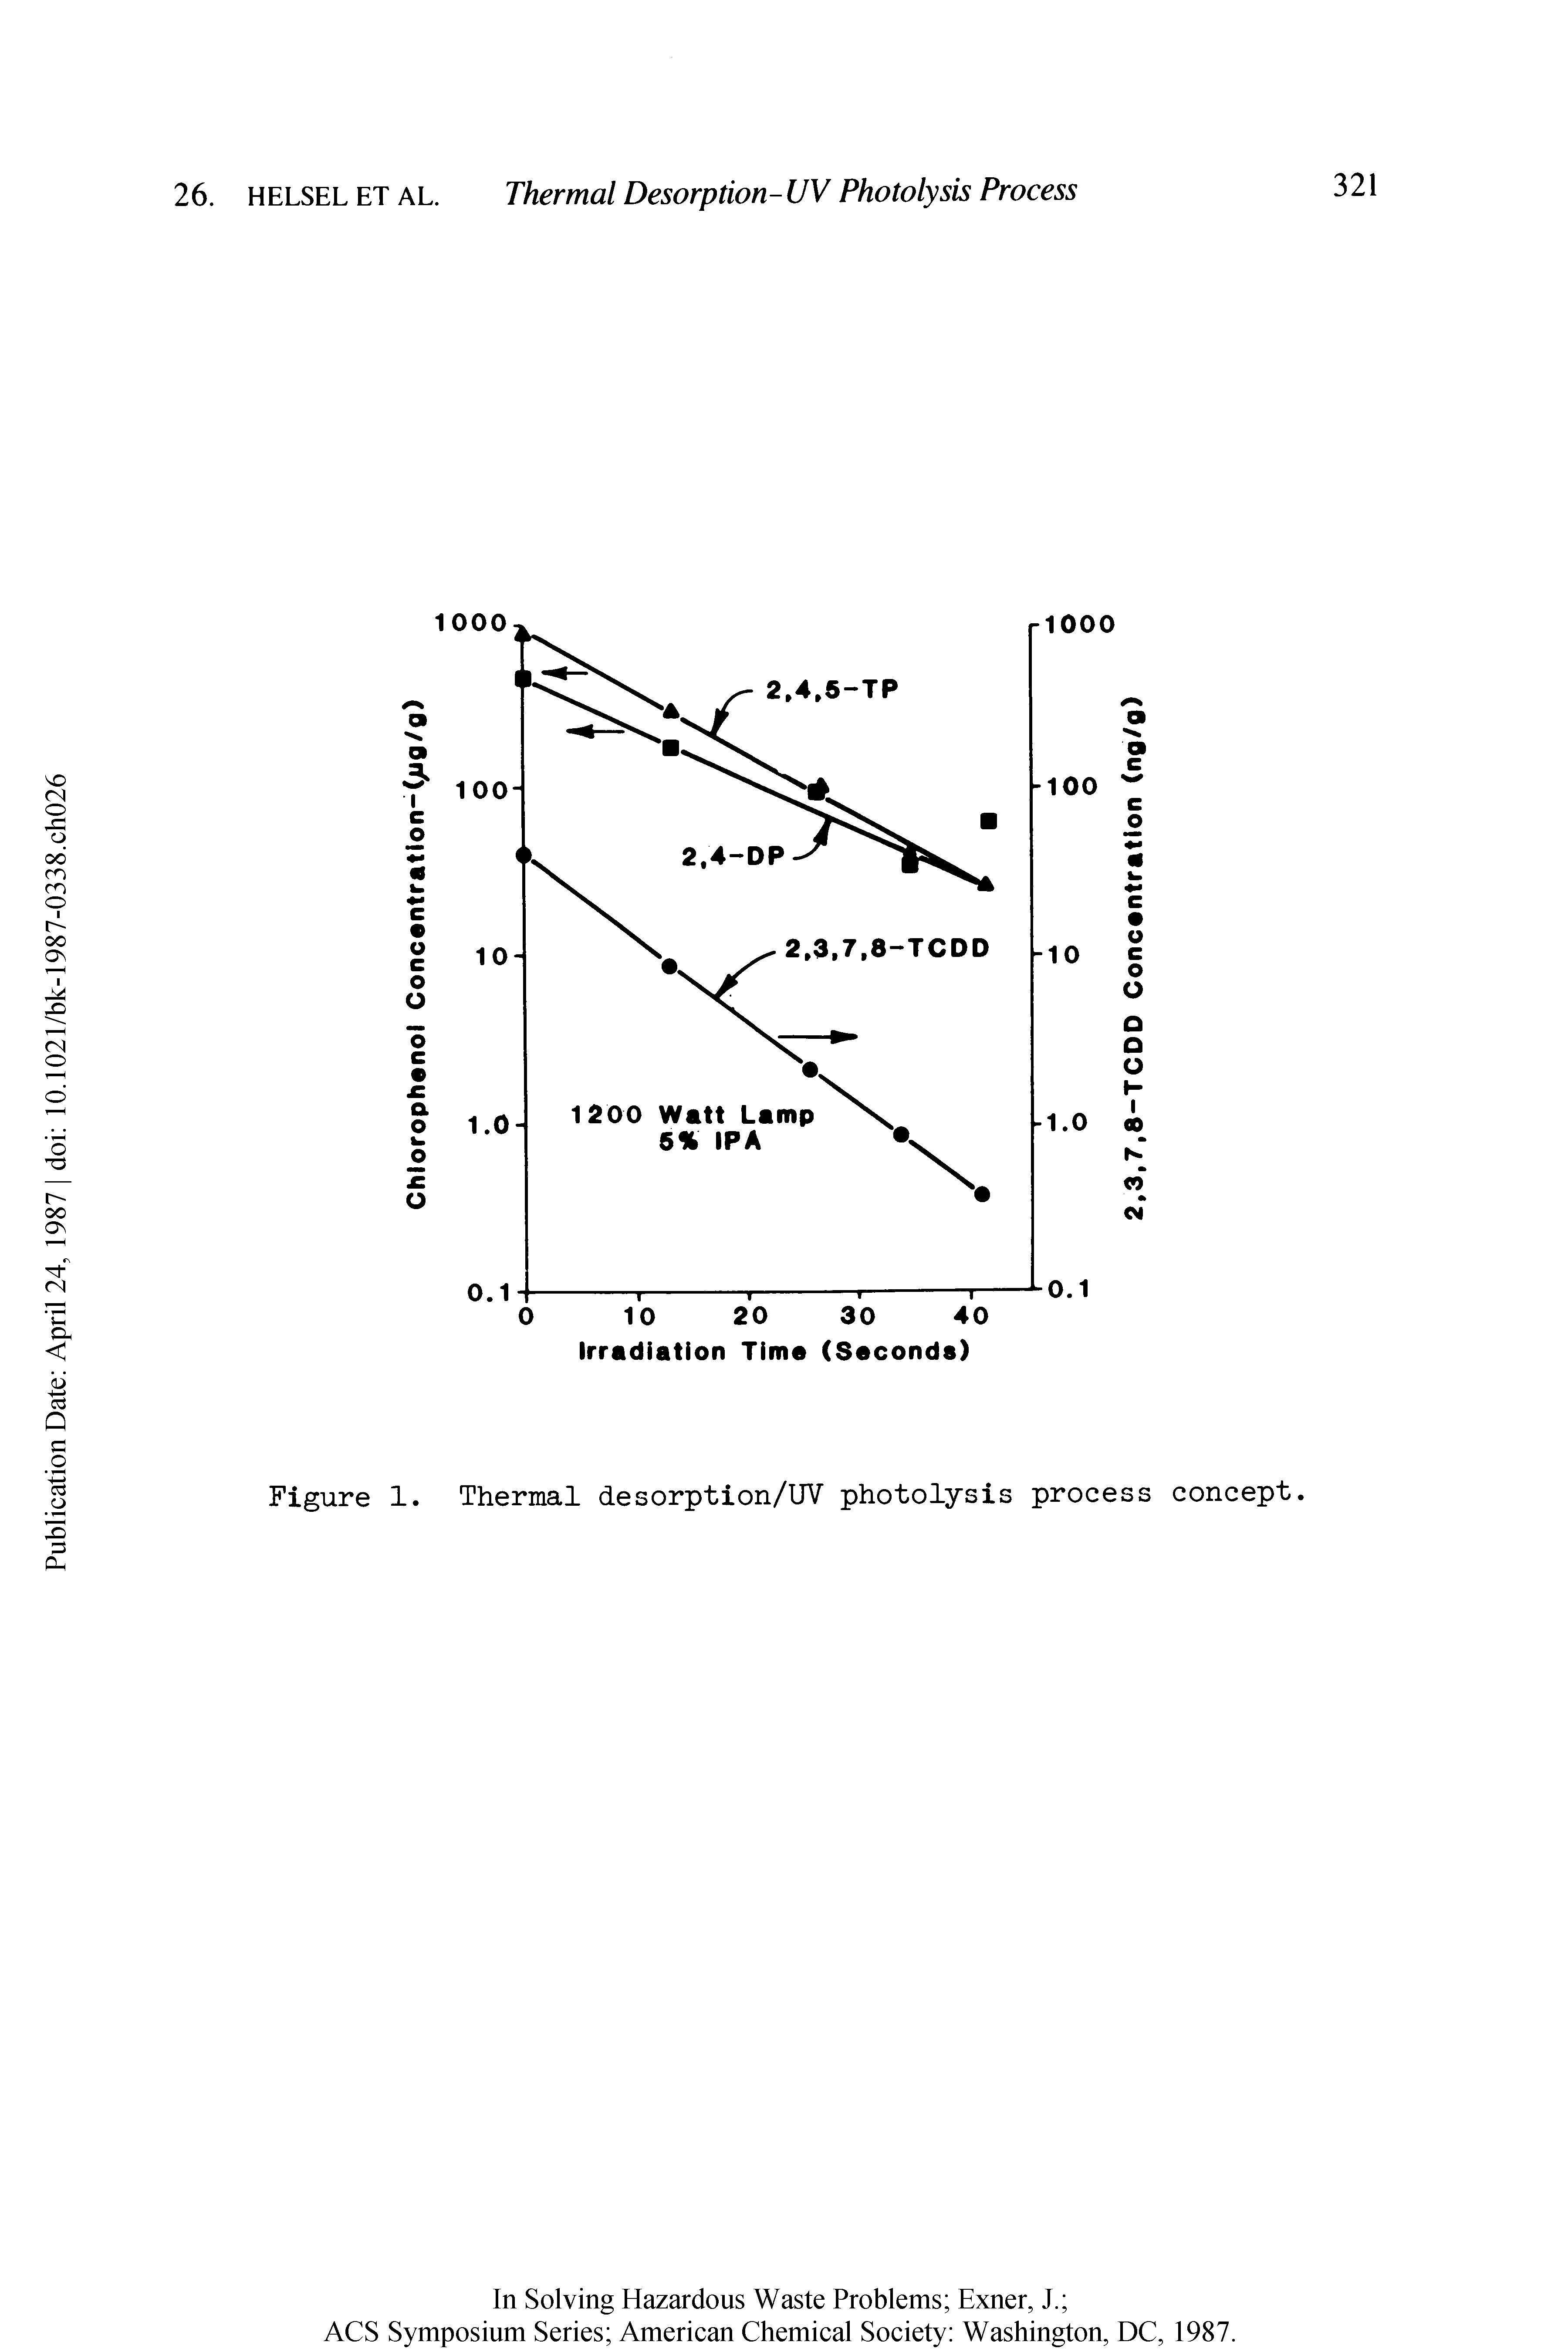 Figure 1. Thermal desorption/UV photolysis process concept.